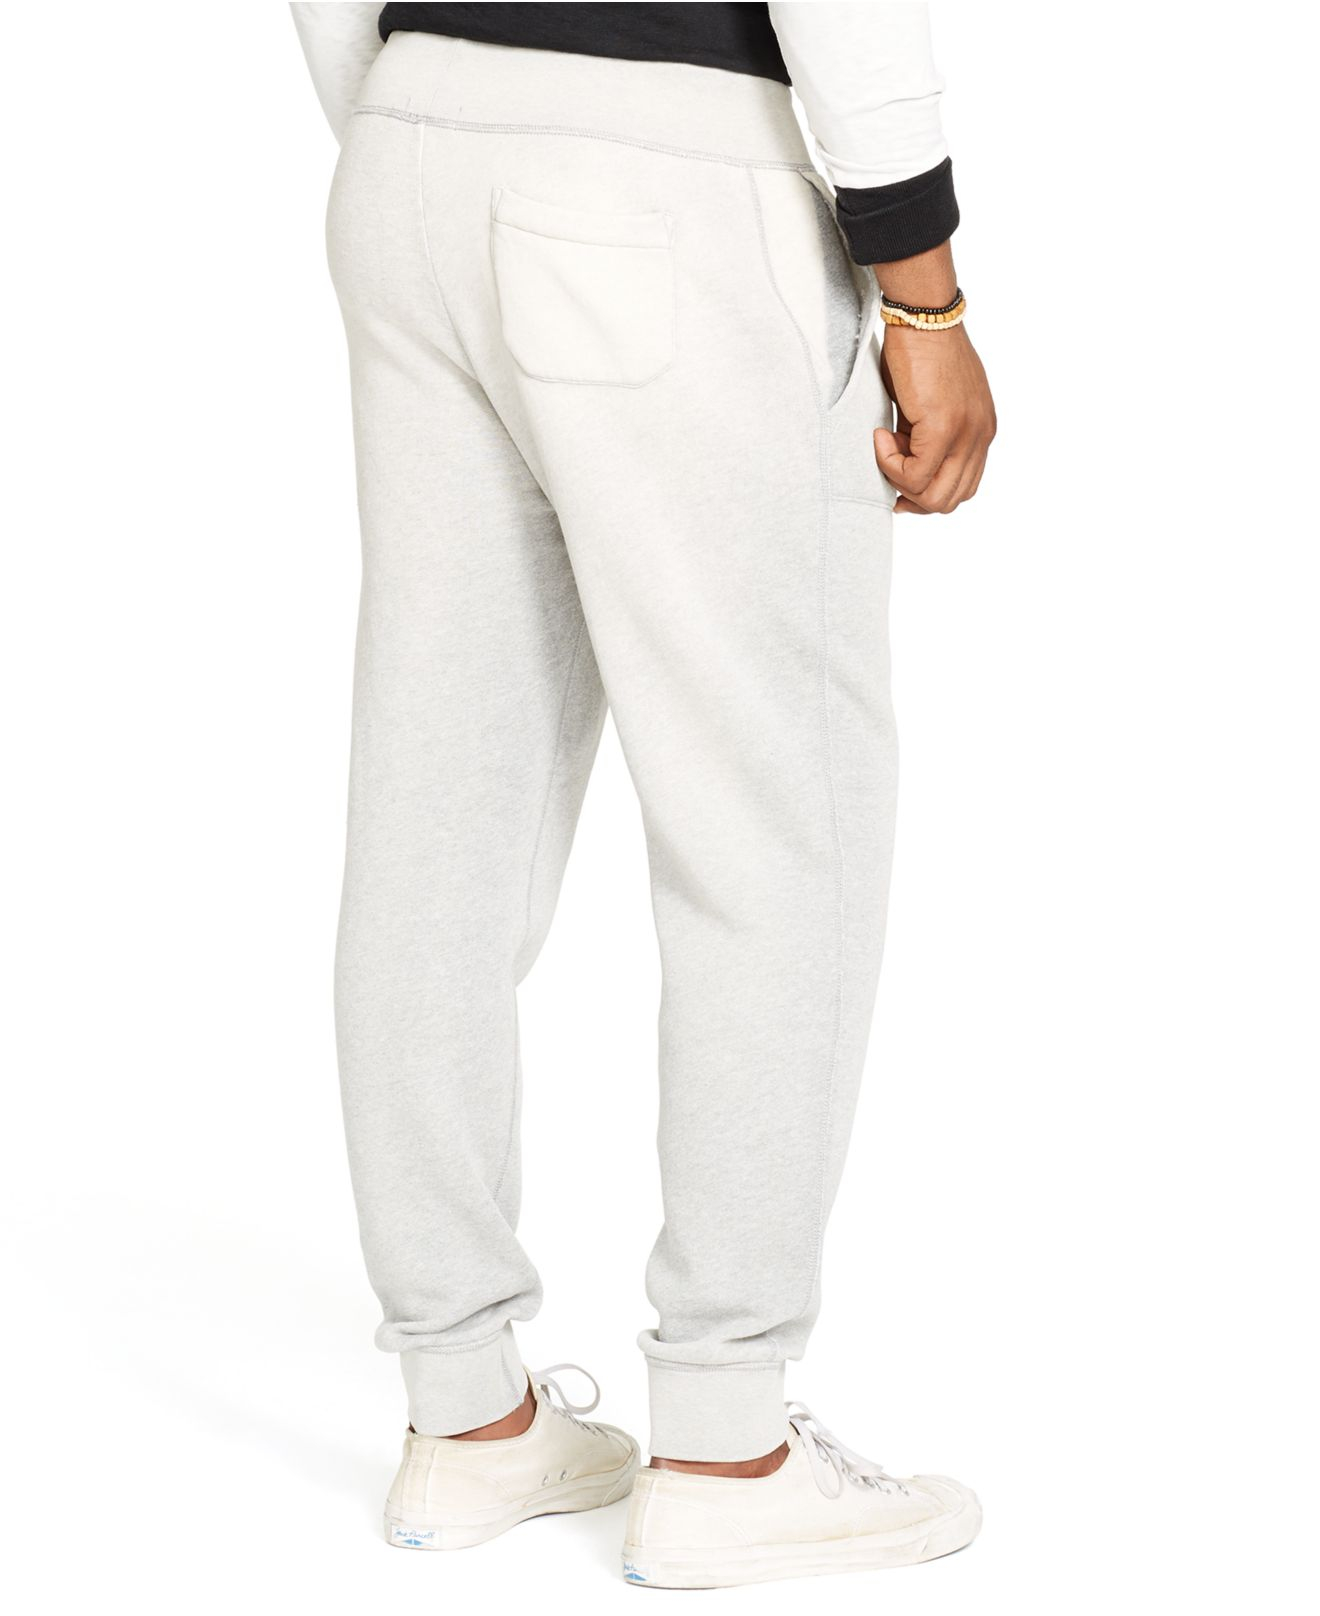 Polo Ralph Lauren Fleece Sweatpants in White for Men - Lyst